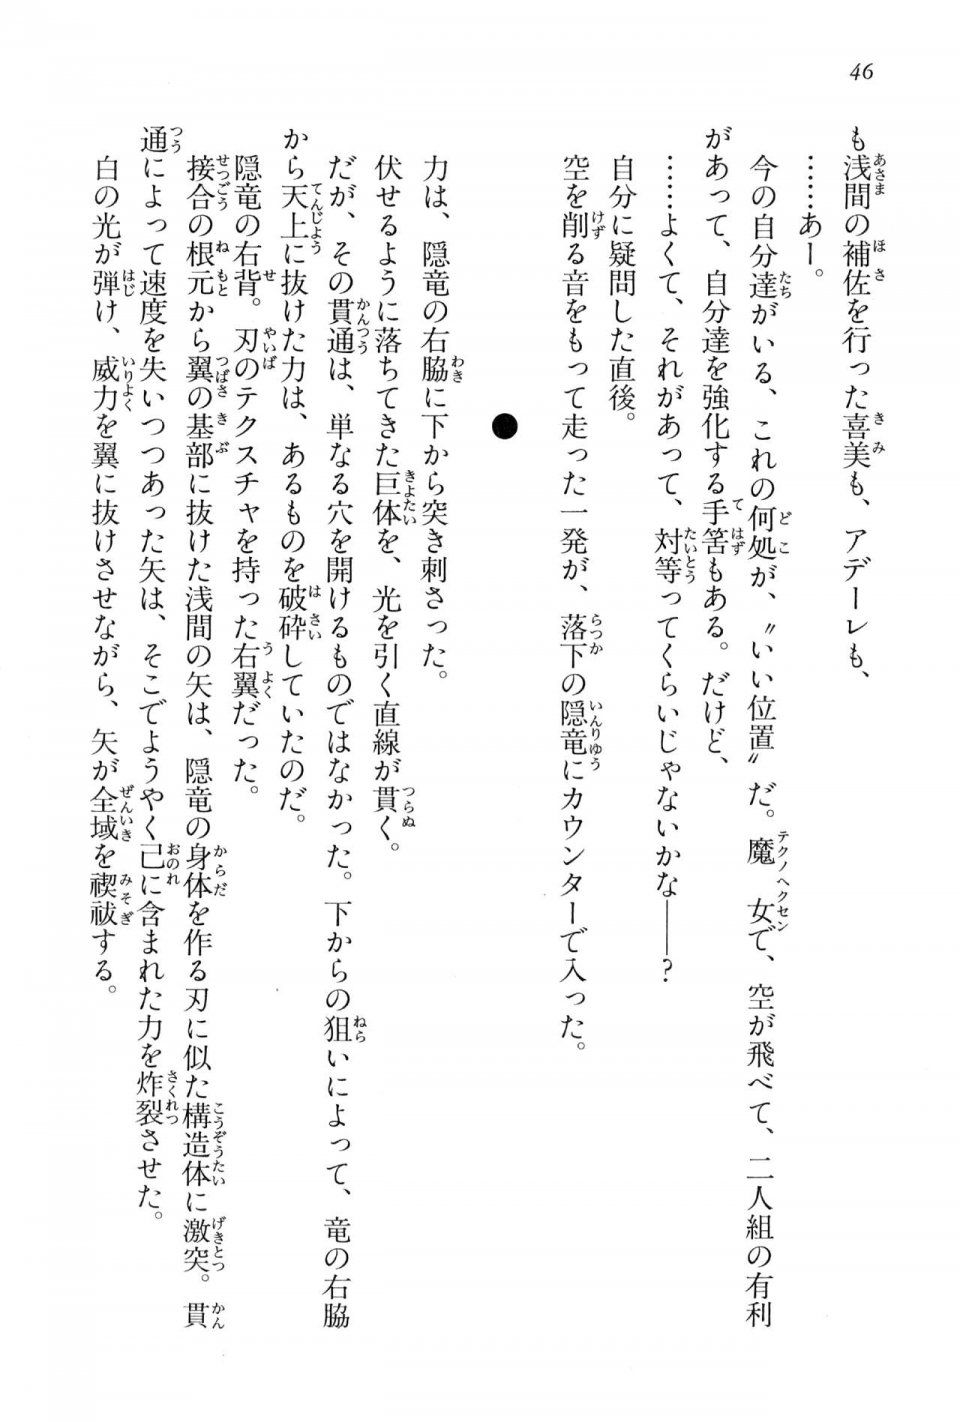 Kyoukai Senjou no Horizon BD Special Mininovel Vol 4(2B) - Photo #50